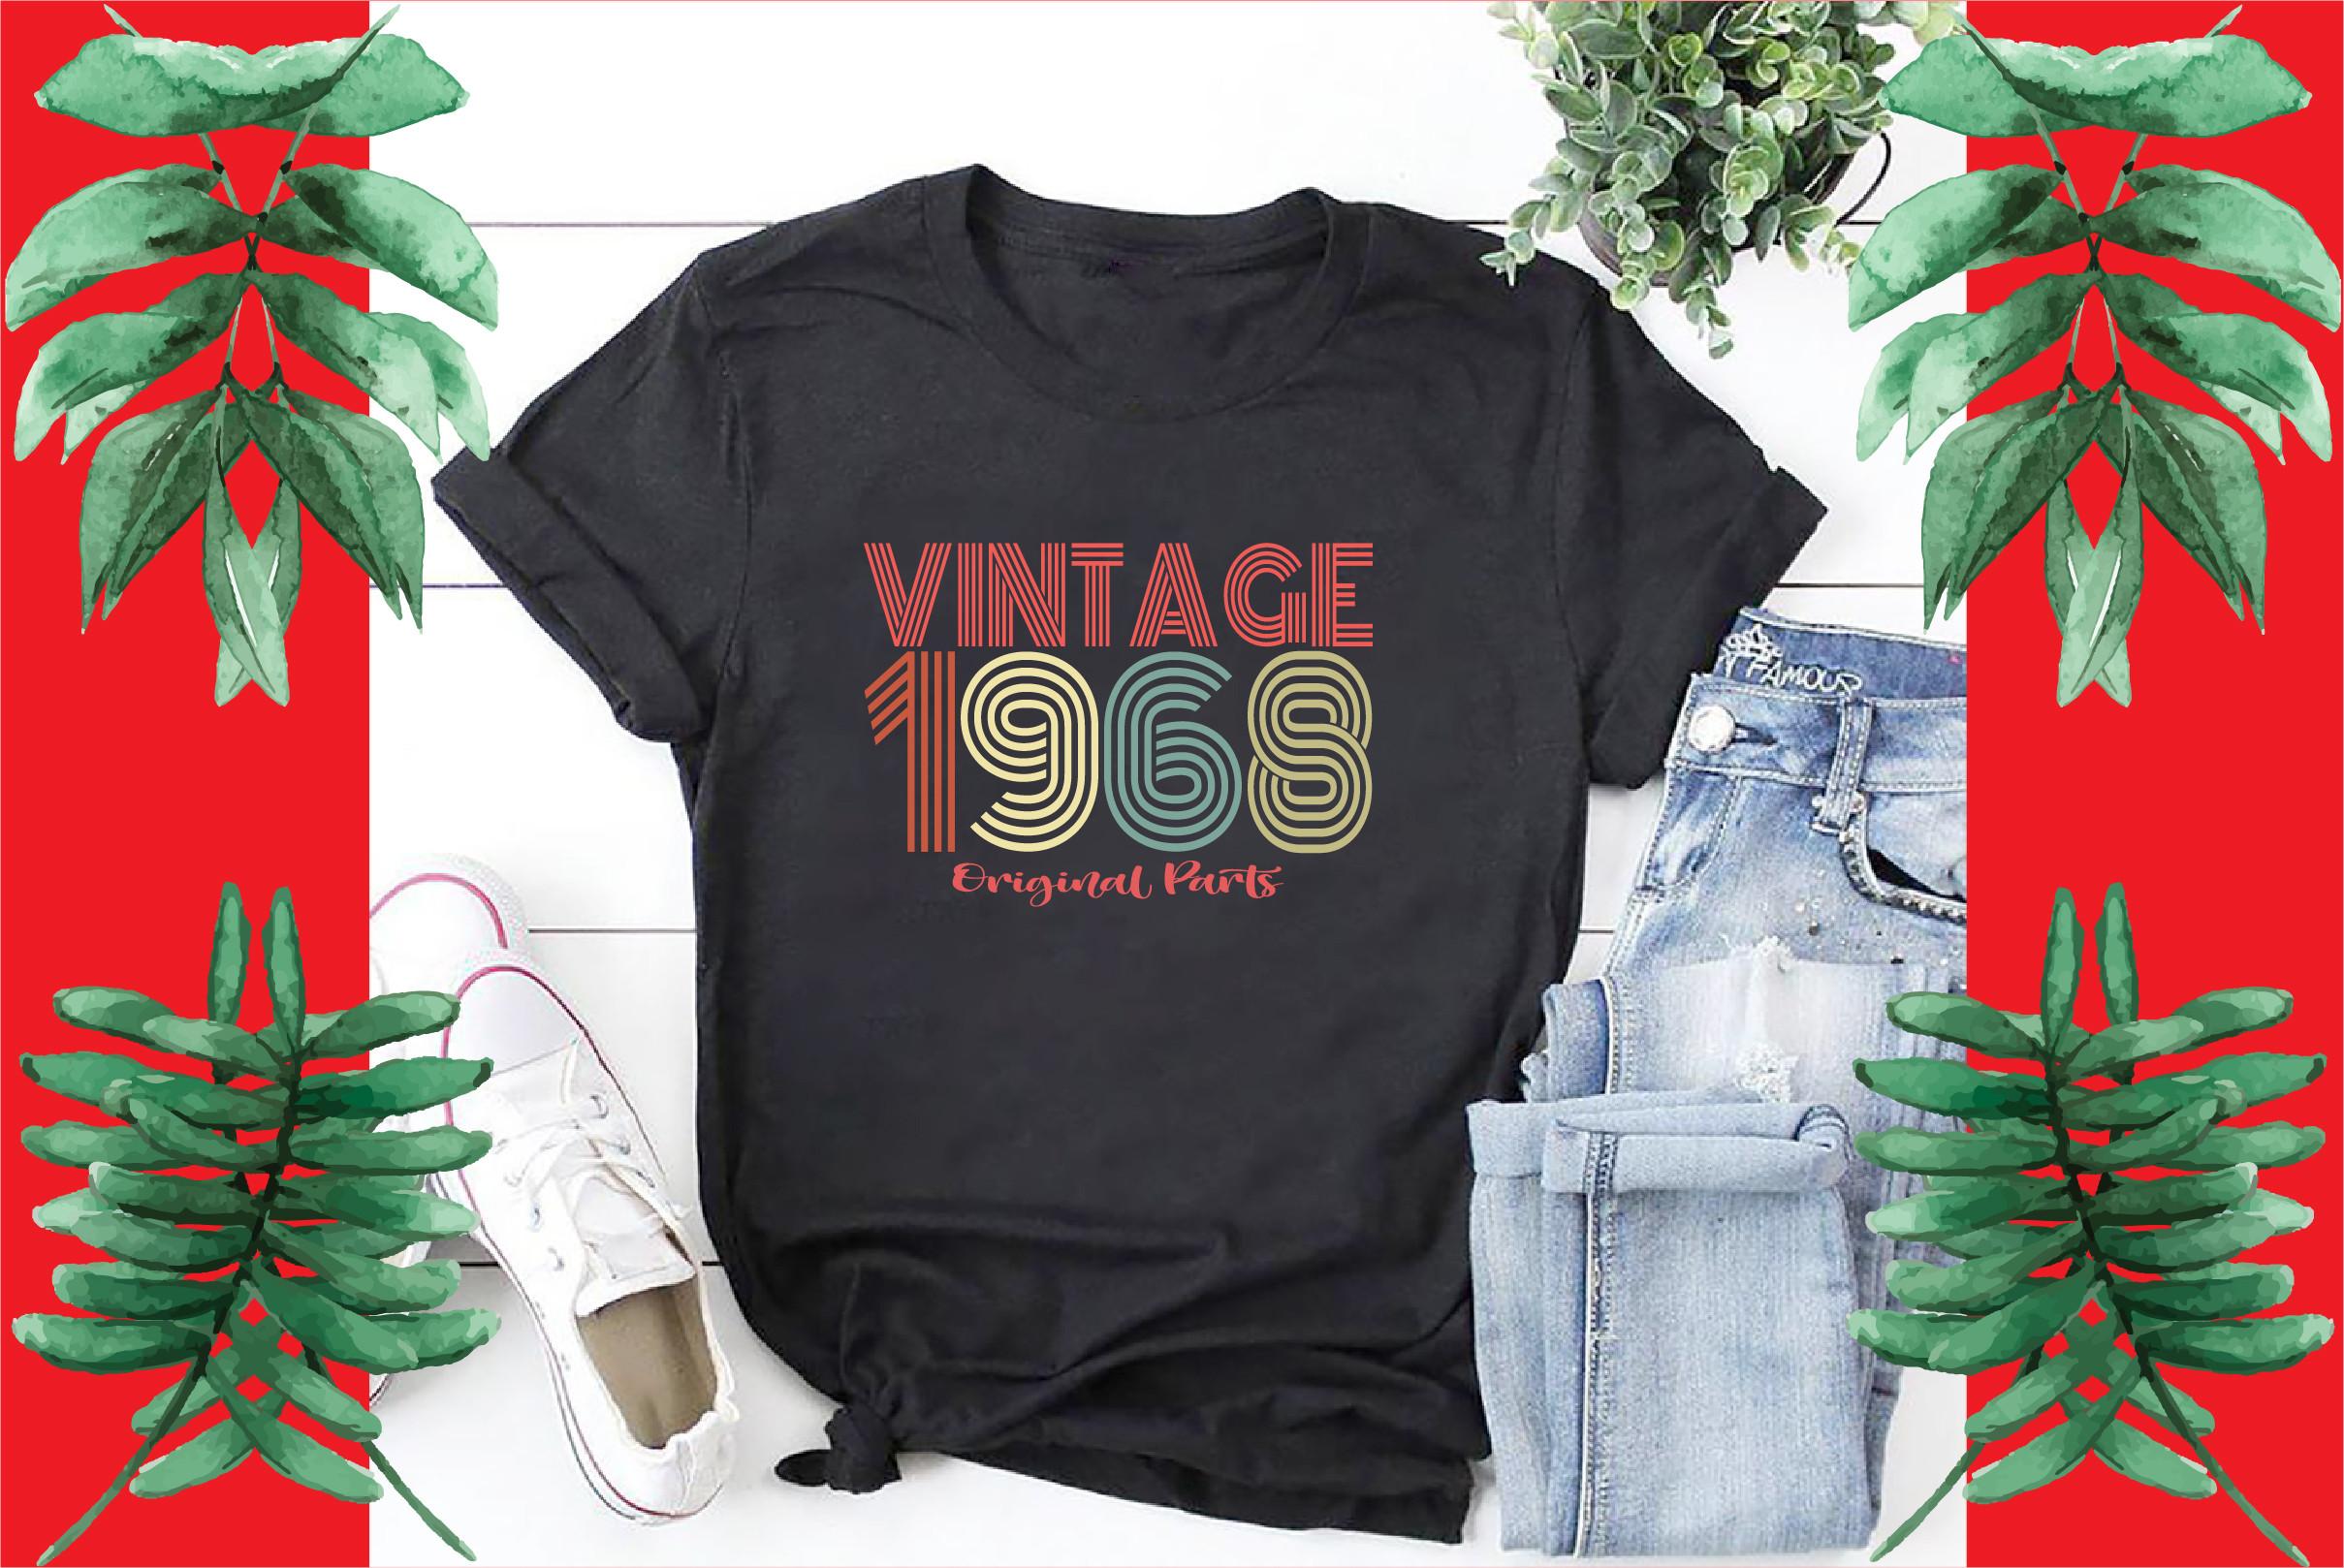 Free T Shirt Vintage 1968 Design.